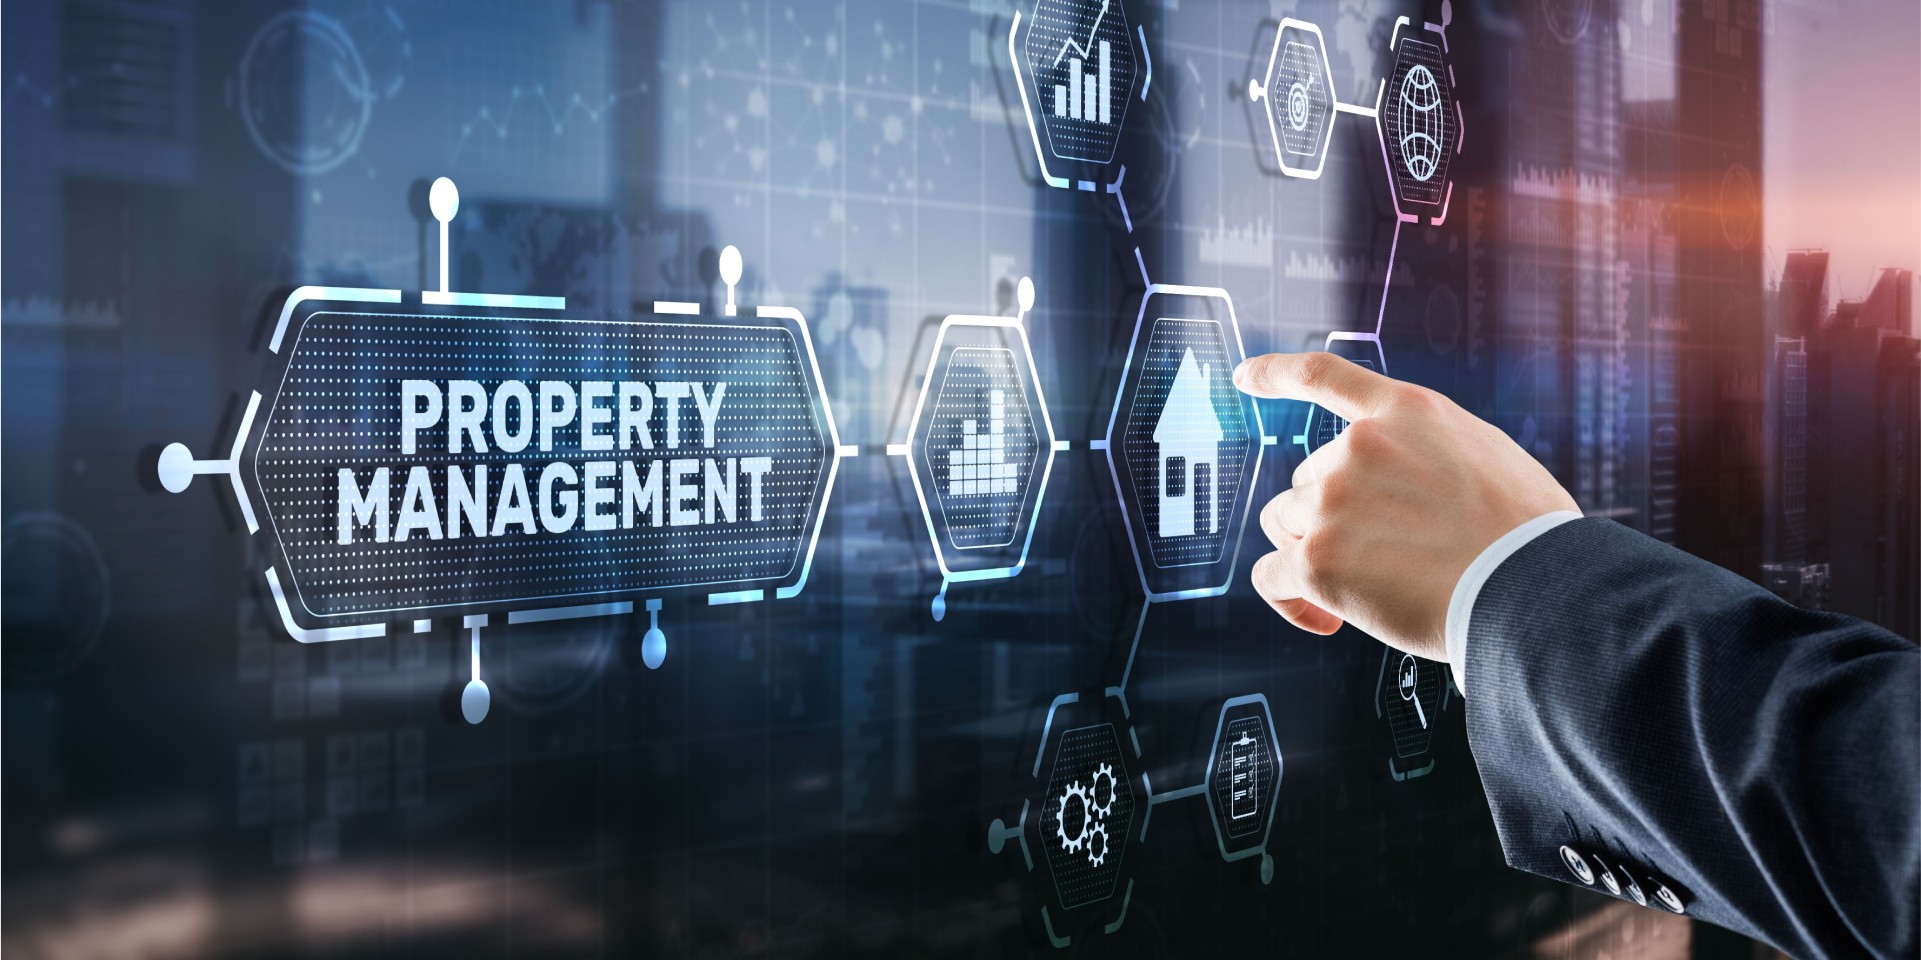 KF Braun Management - full service property management company